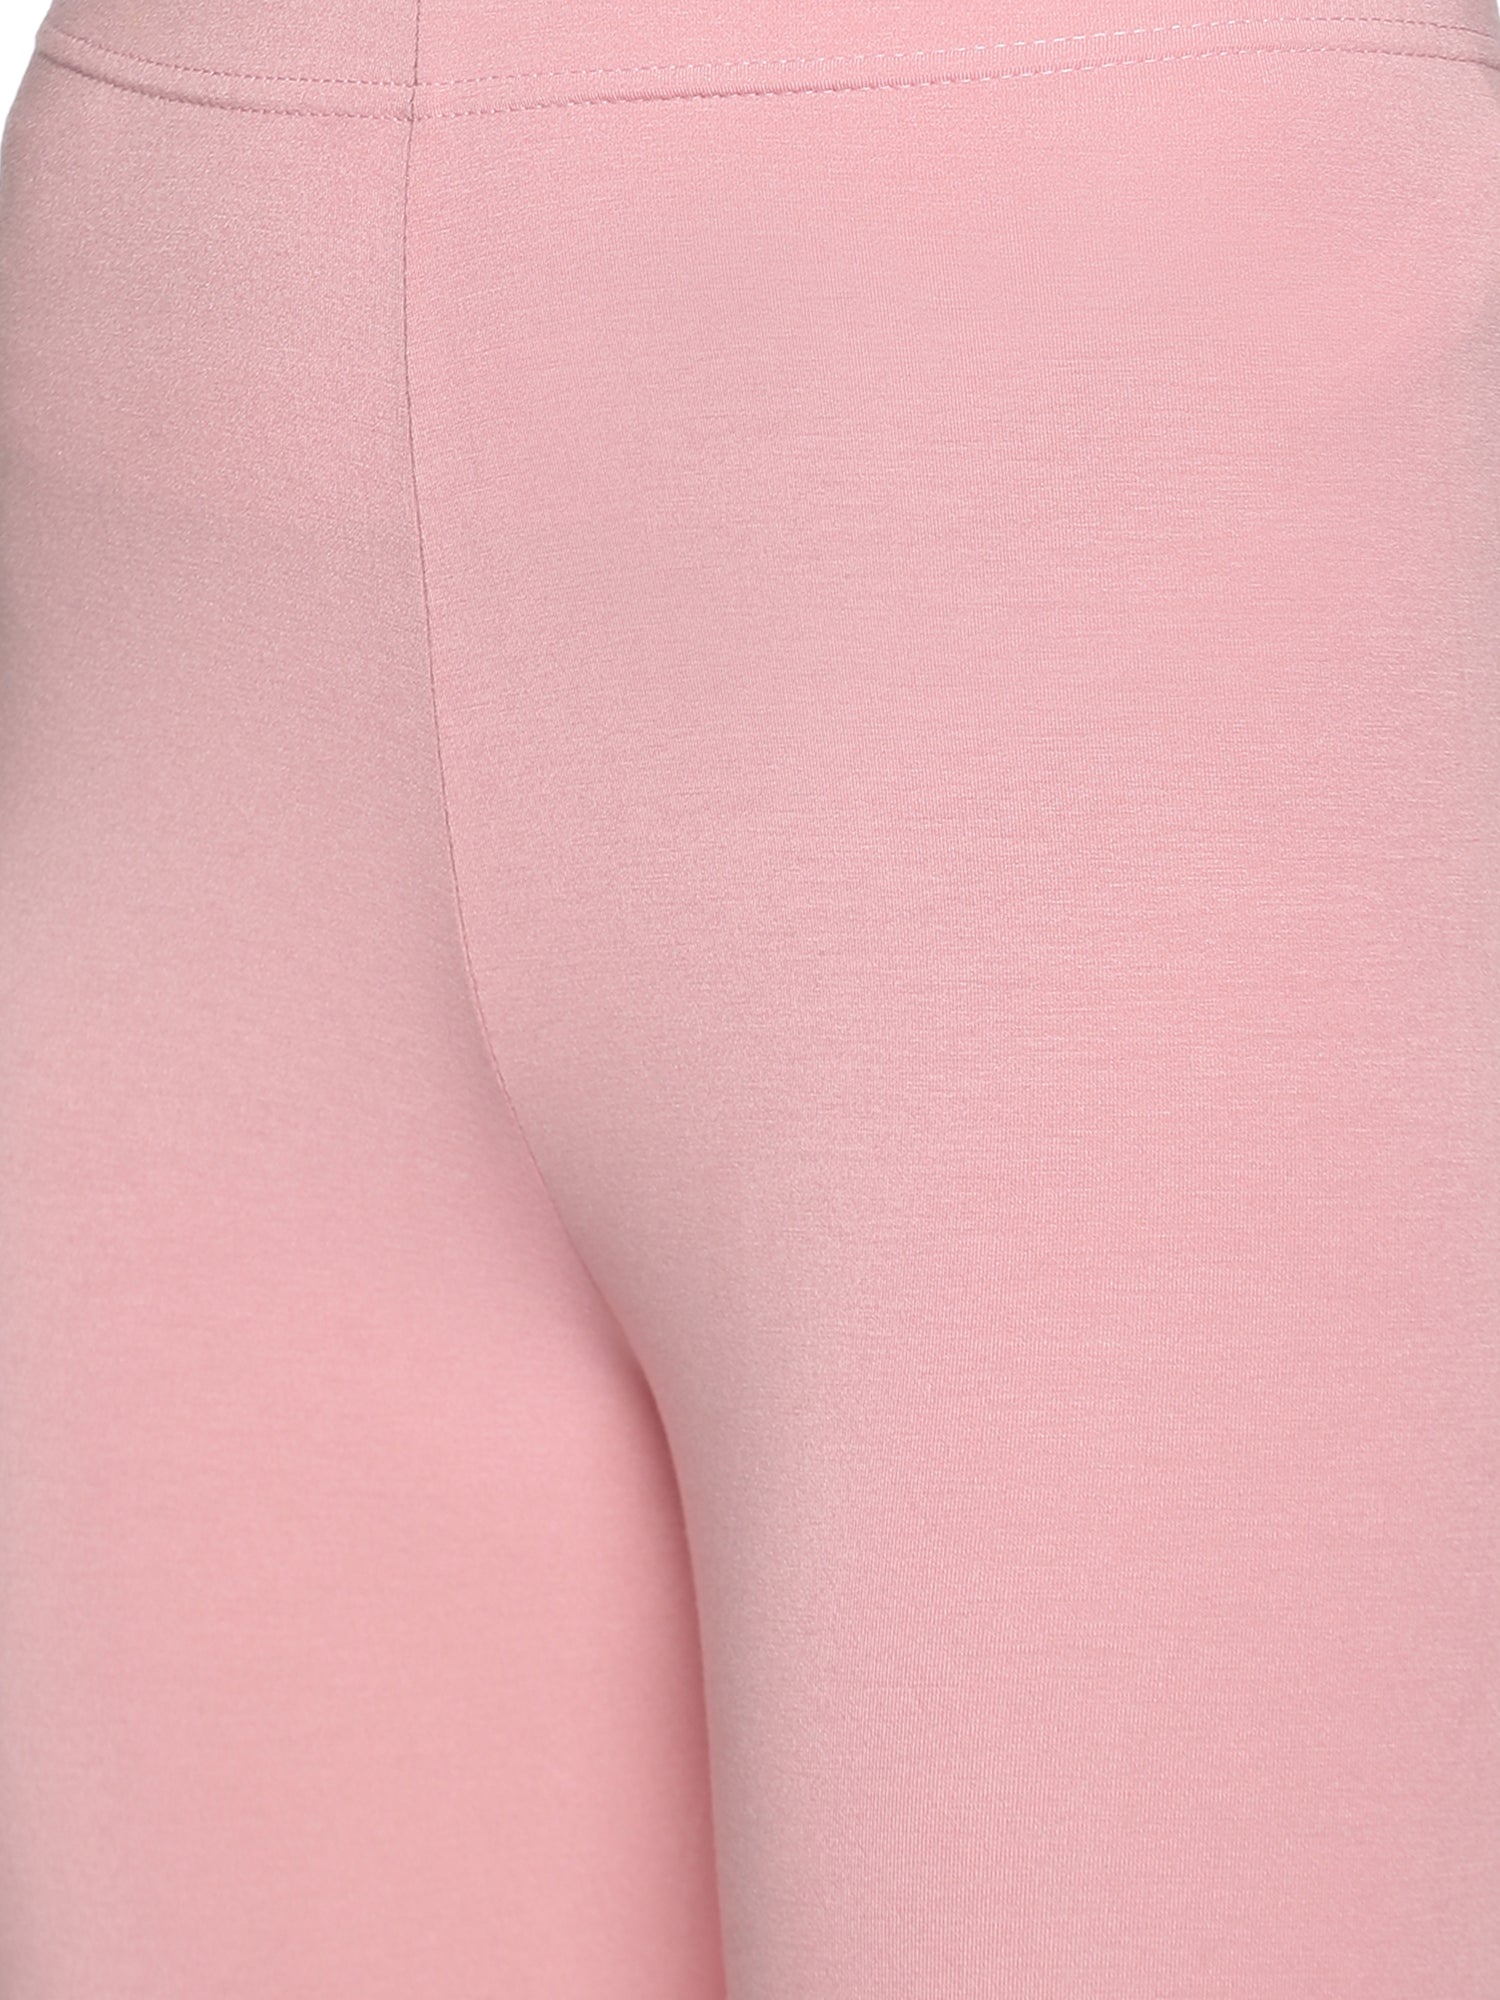 Pink churidar